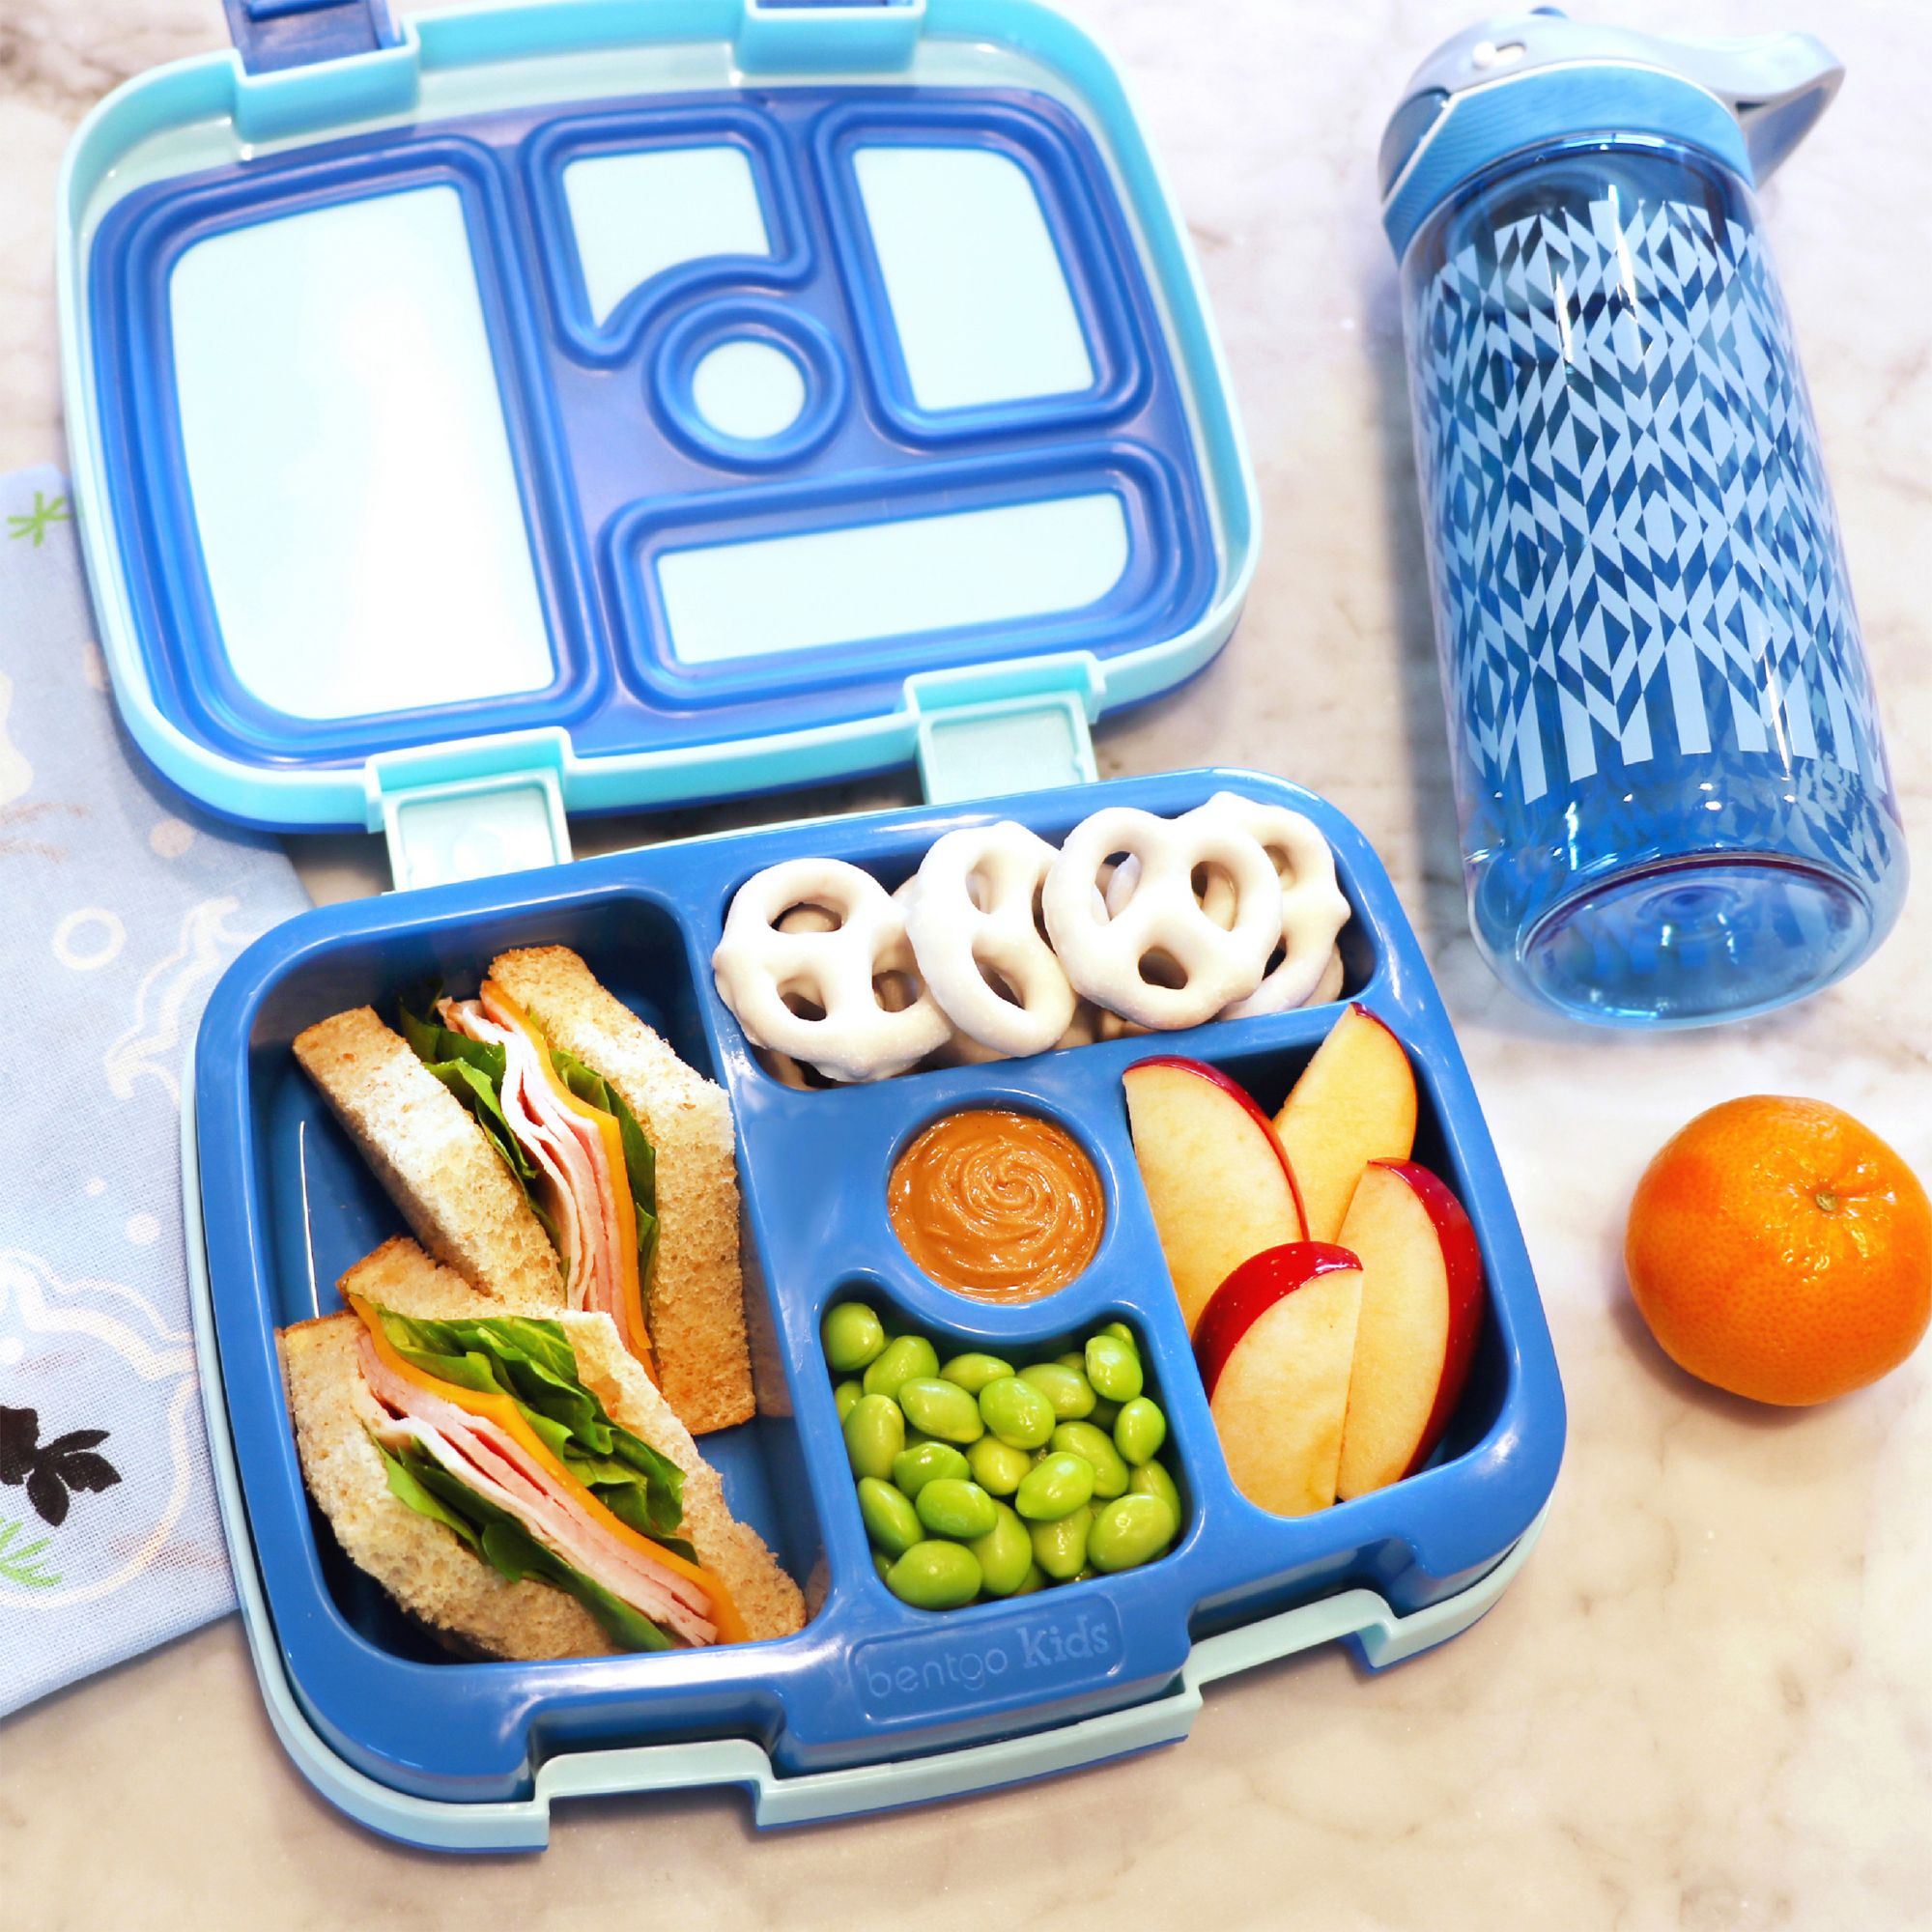 Bentgo Kids Lunch Box Blue BGOKIDS-B - Best Buy